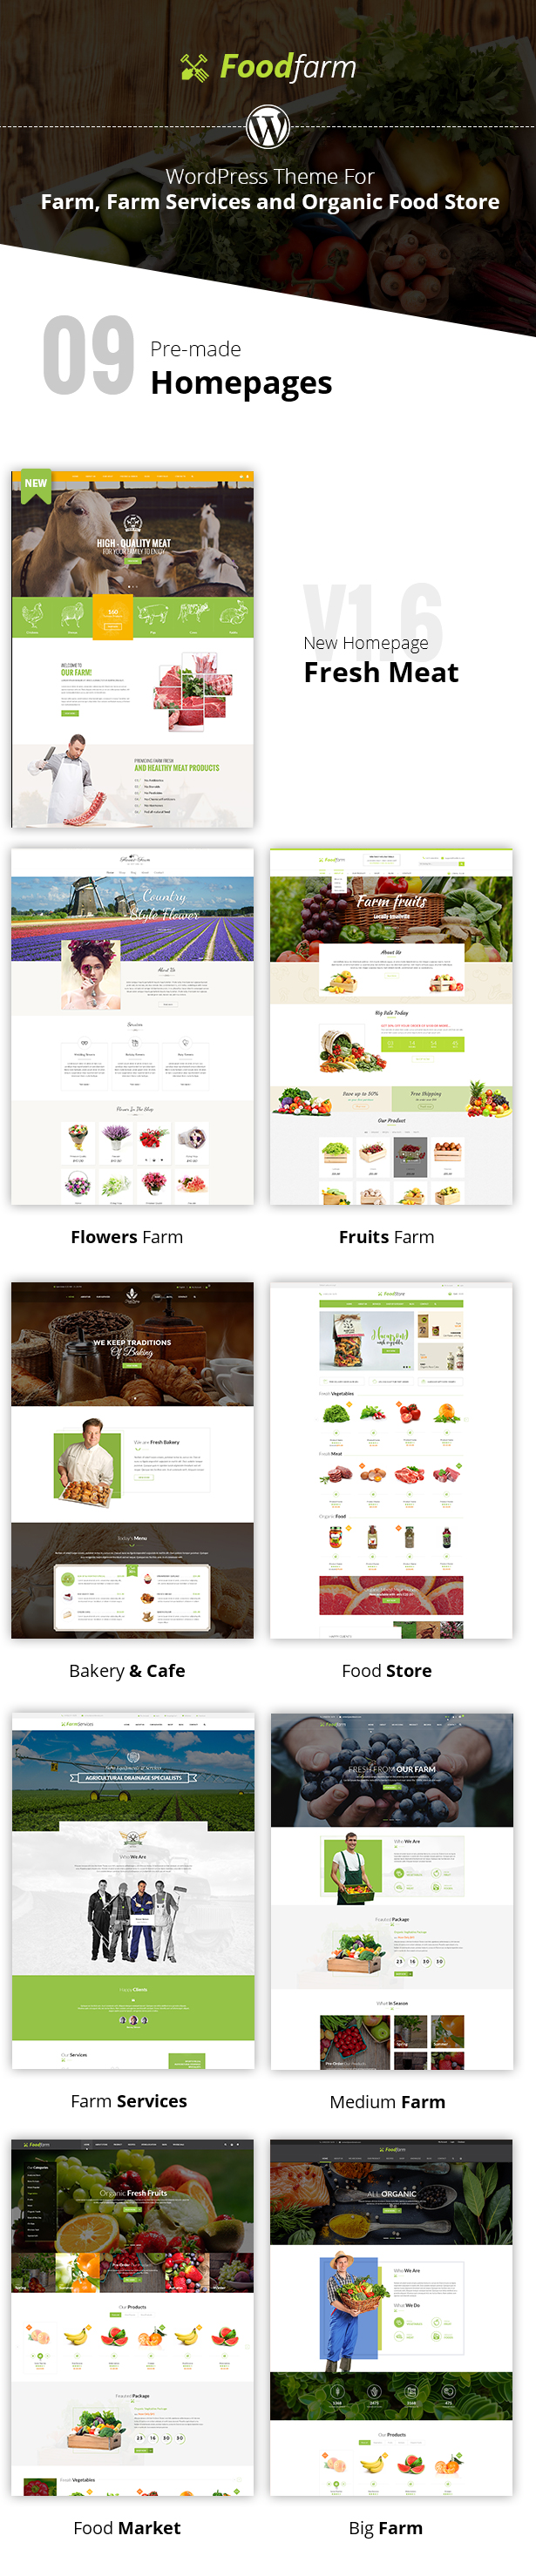 FoodFarm – WordPress Theme for Farm, Farm Services and Organic Food Store - 13